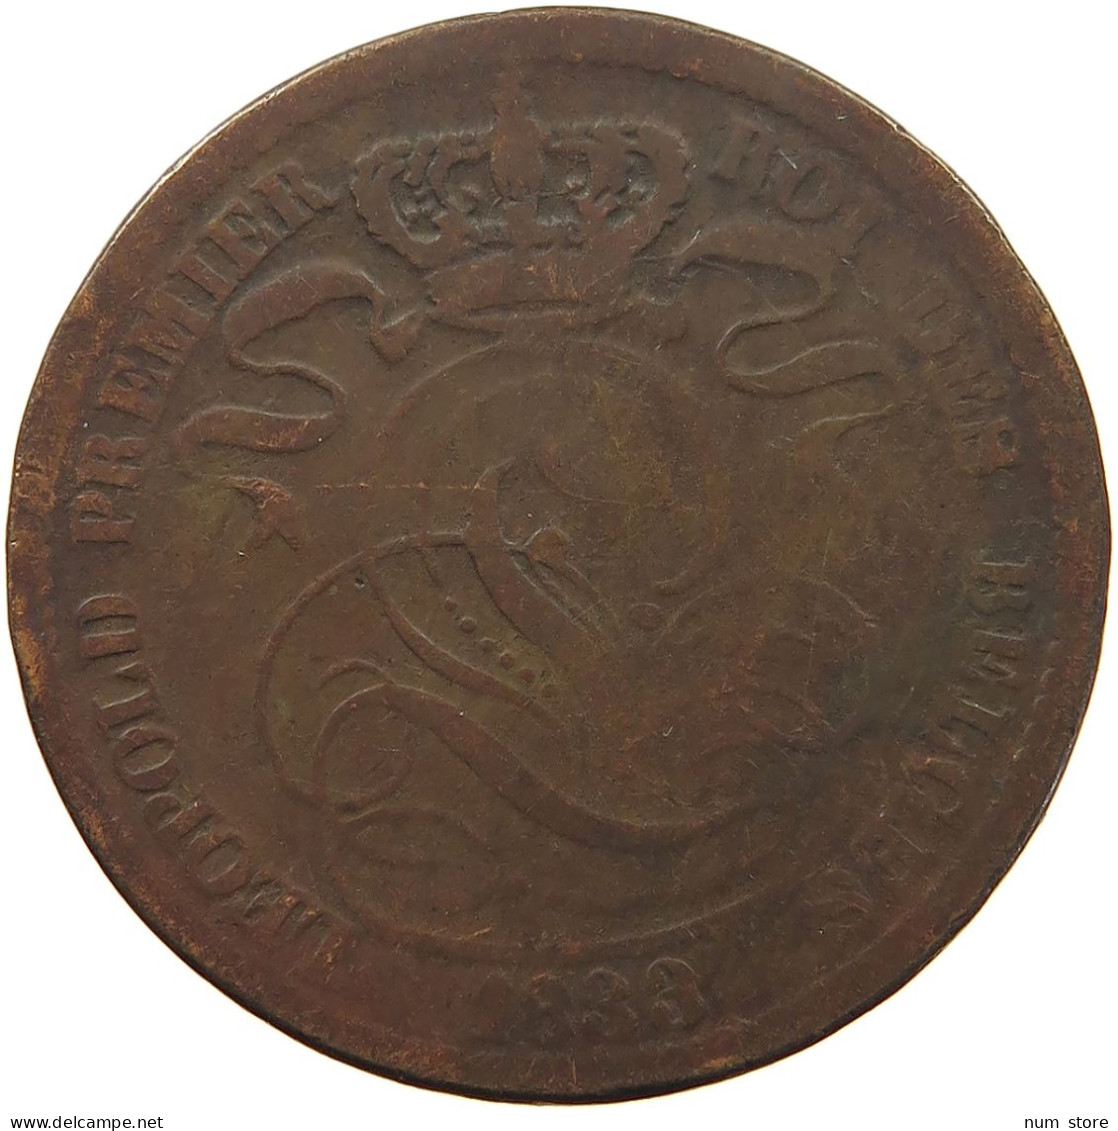 BELGIUM 10 CENTIMES 1833 Leopold I. (1831-1865) #c004 0299 - 10 Cents